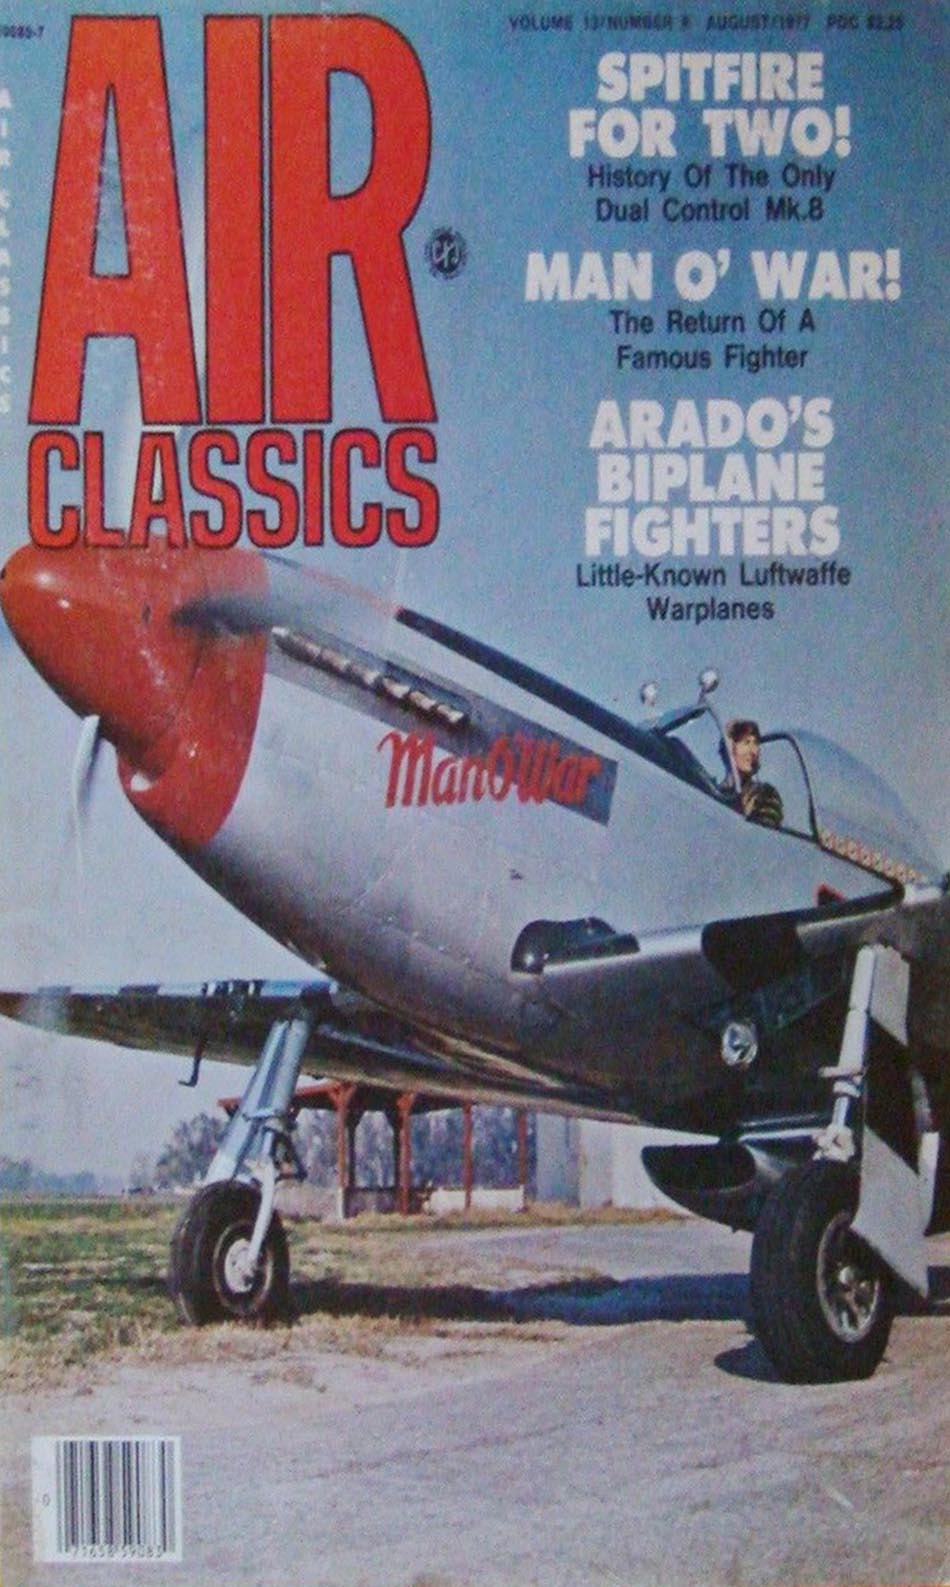 Air Classics August 1977 magazine back issue Air Classics magizine back copy 